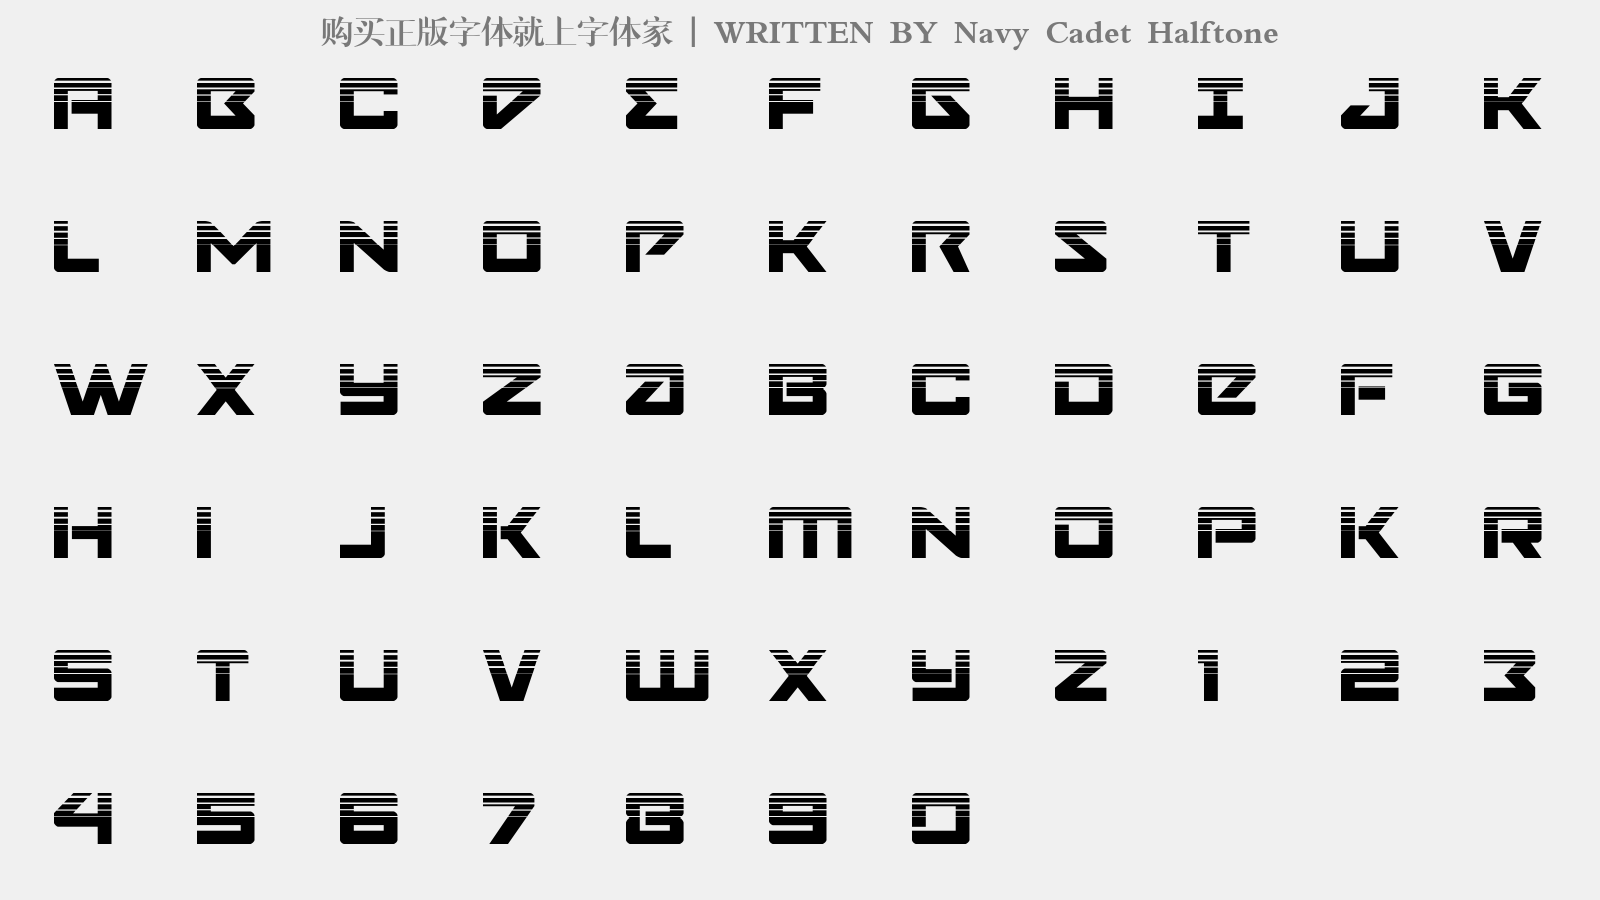 Navy Cadet Halftone - 大写字母/小写字母/数字